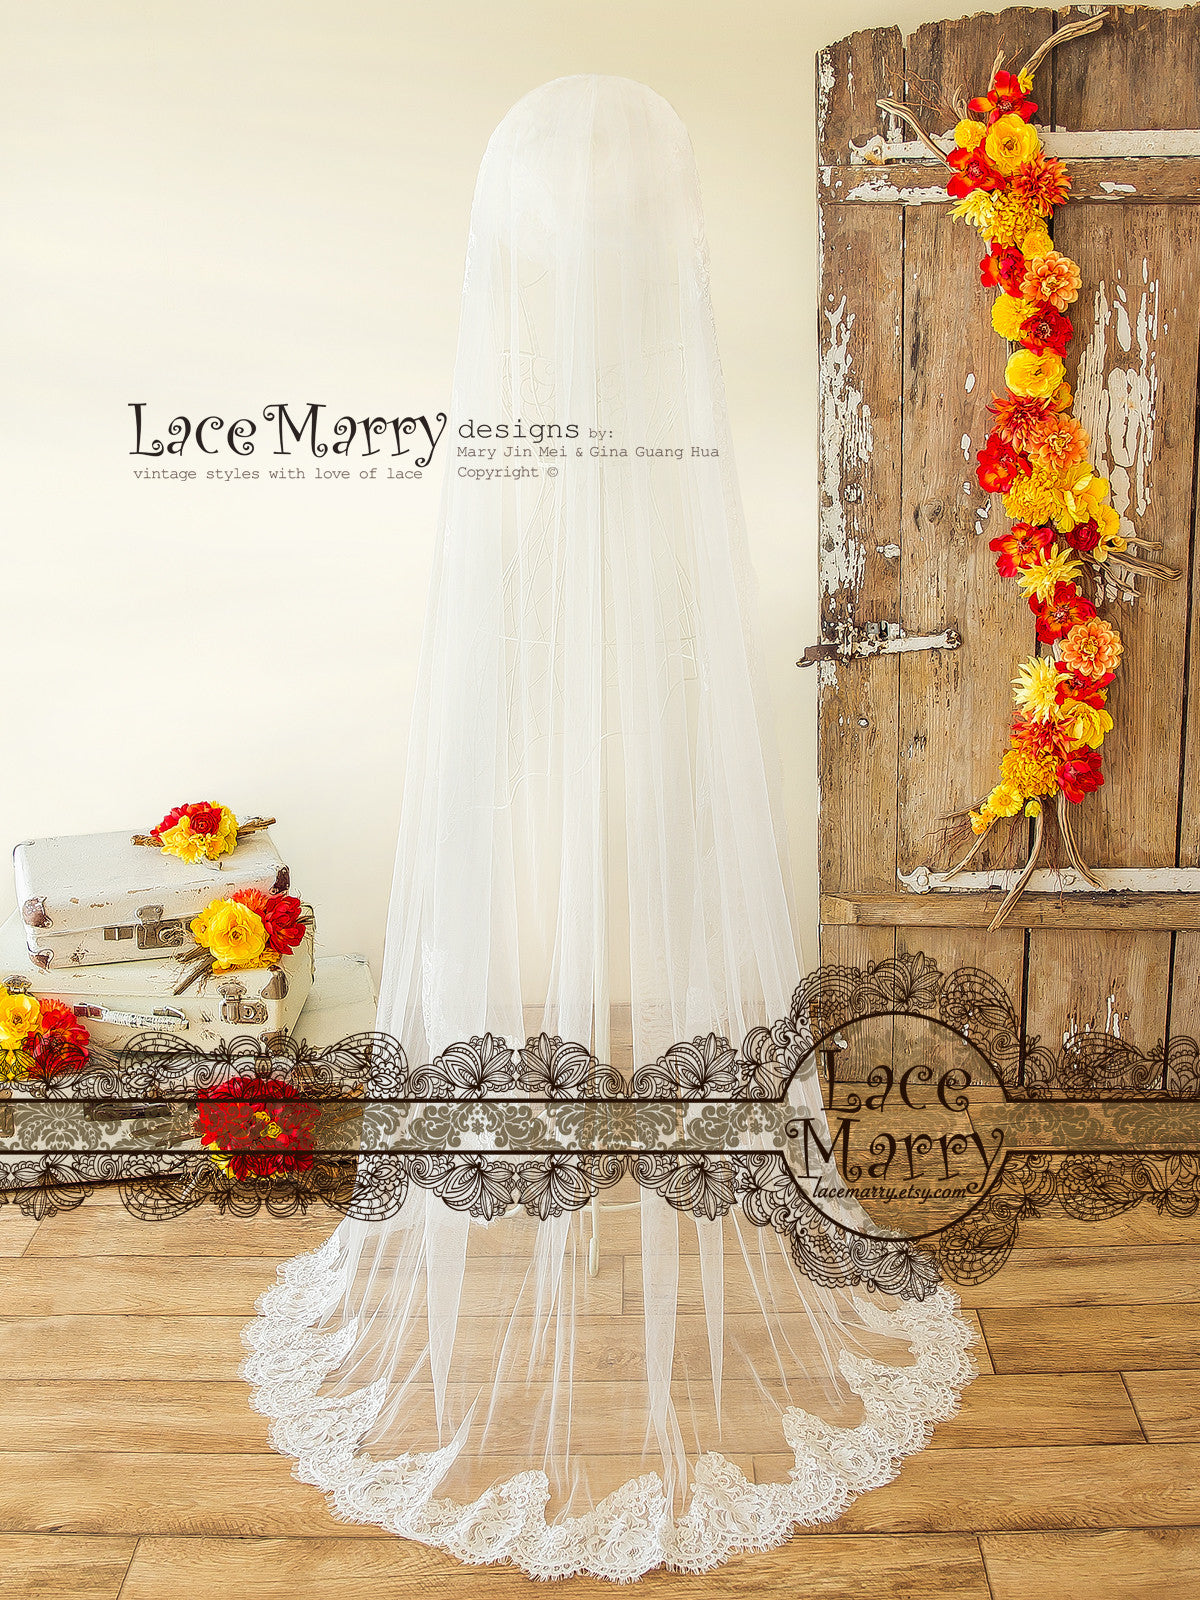 Veil lace edge bridal veil wedding cathedral long veil royal tier chapel  length